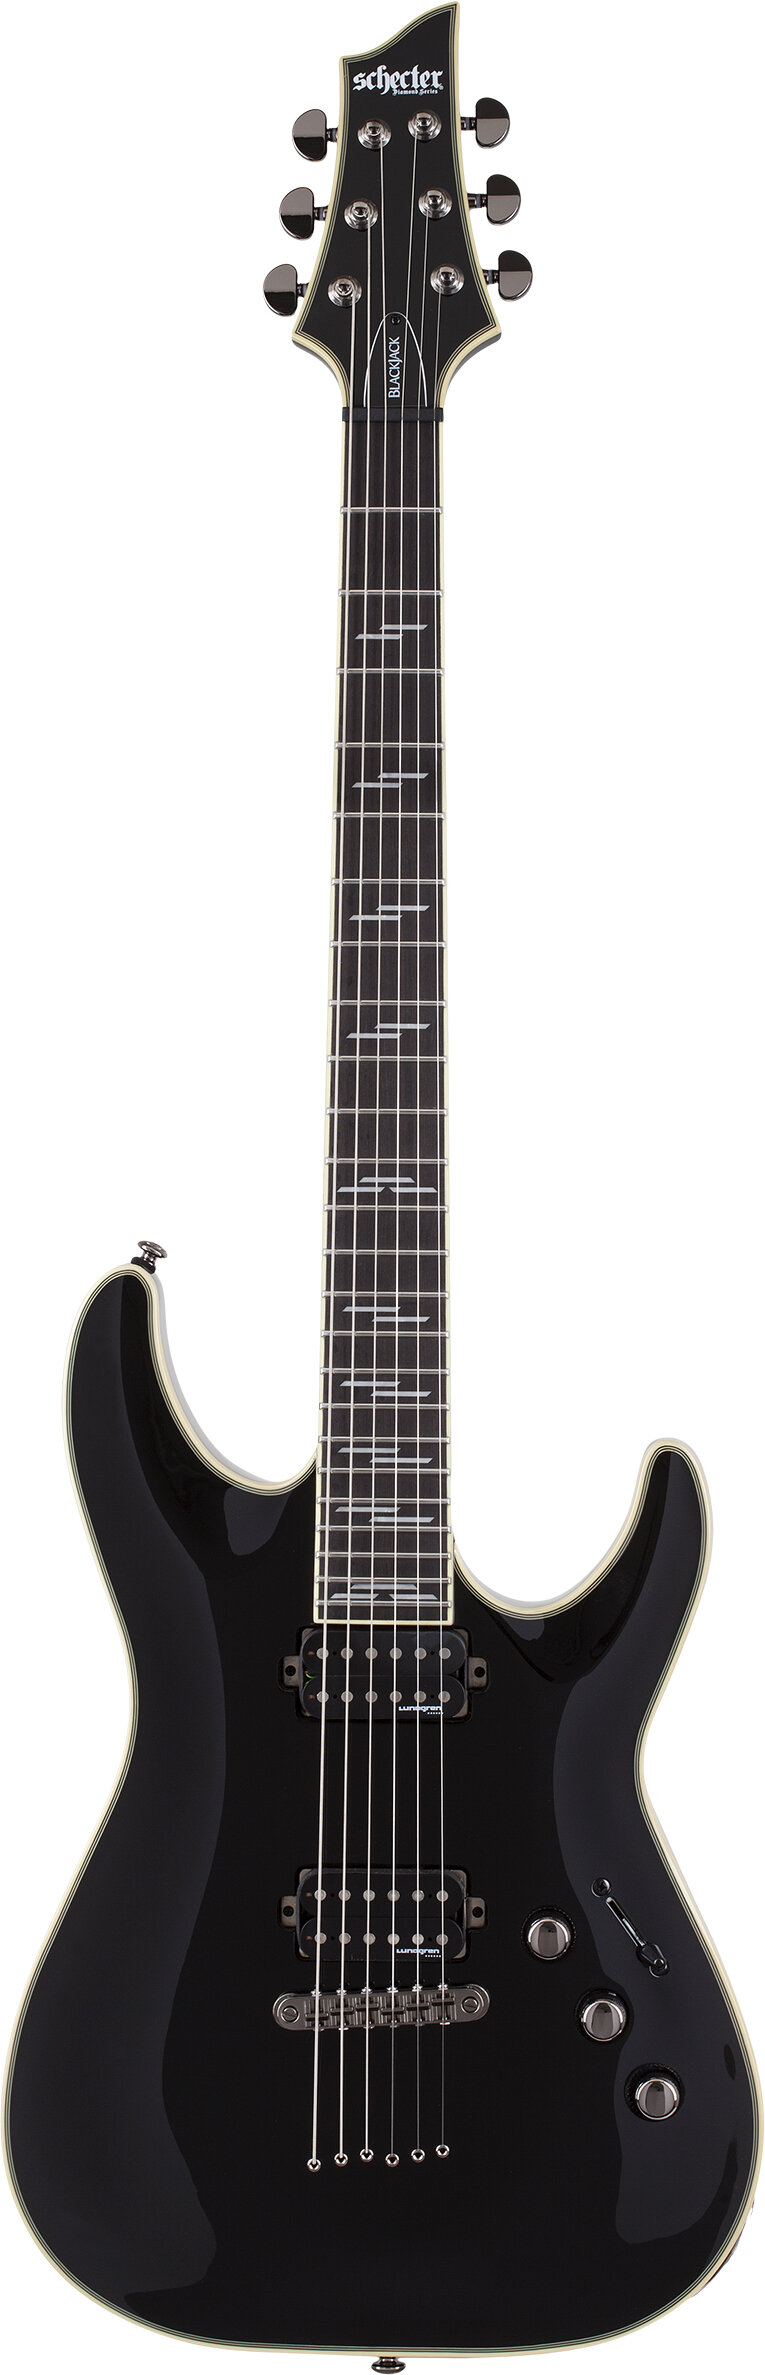 Schecter C-1 Blackjack Electric Guitar Gloss Black -  2560